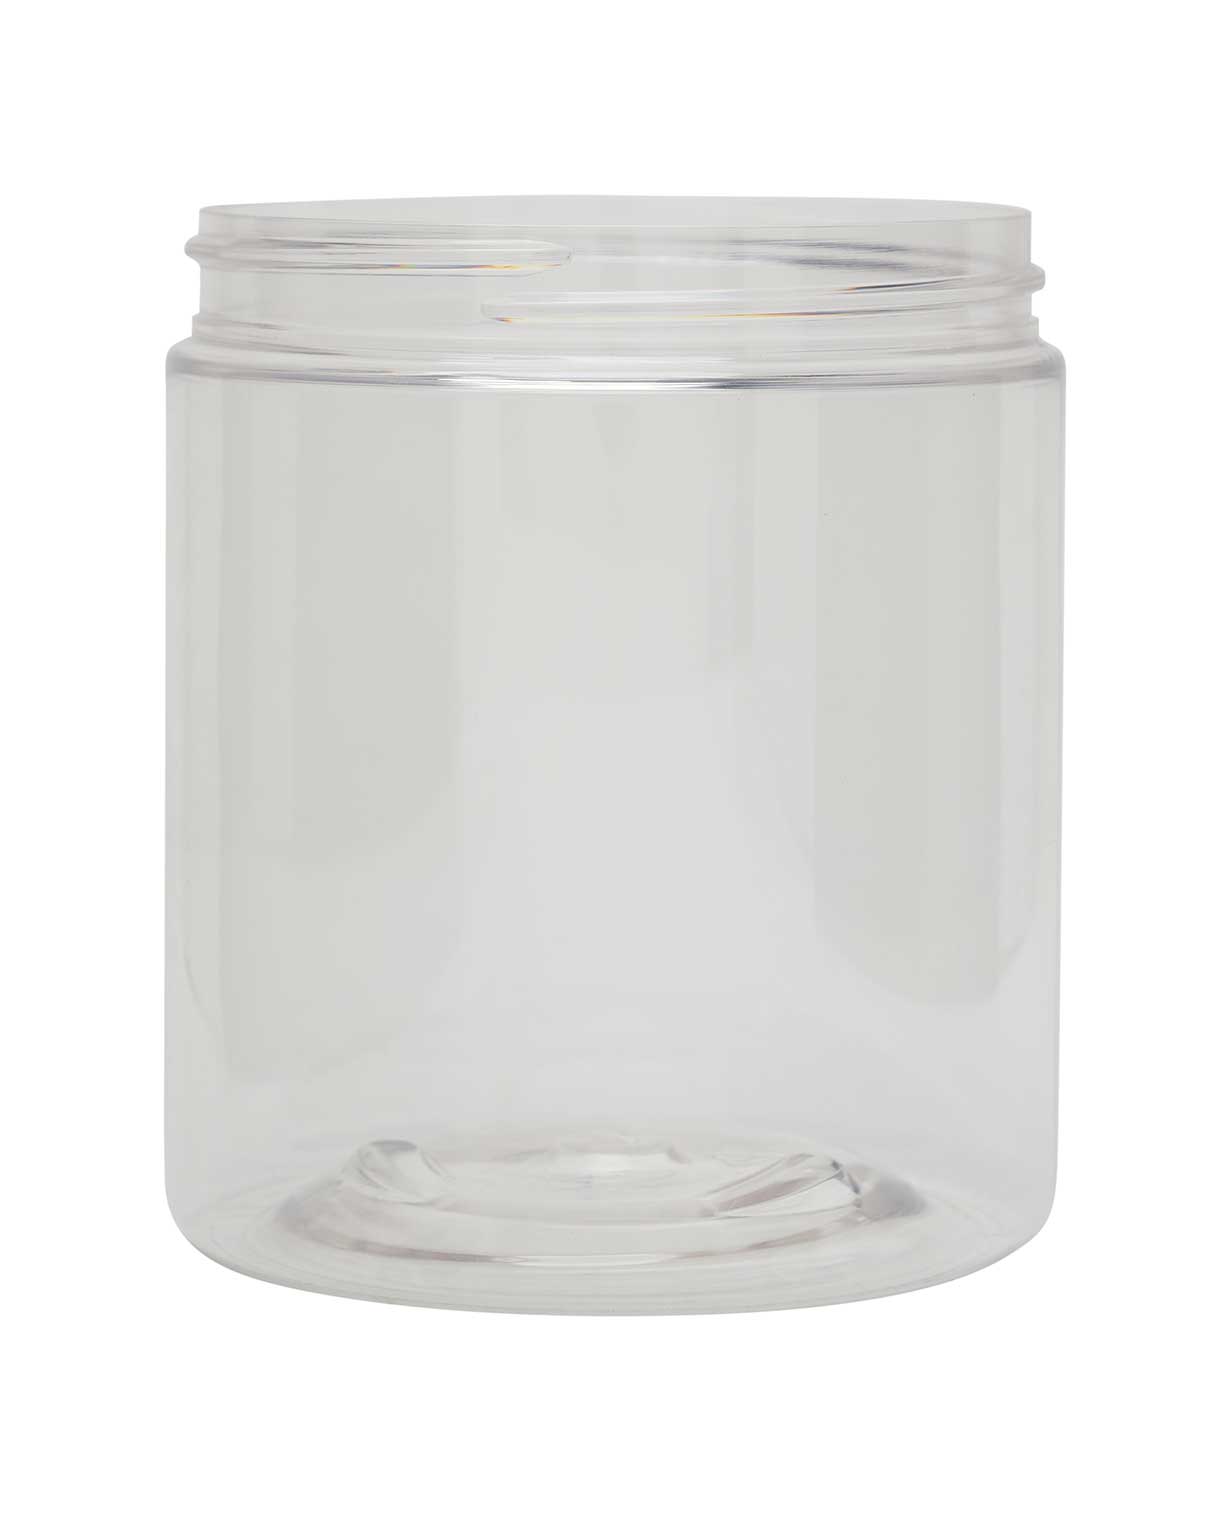 19 oz pet clear wide mouth jar 89-400